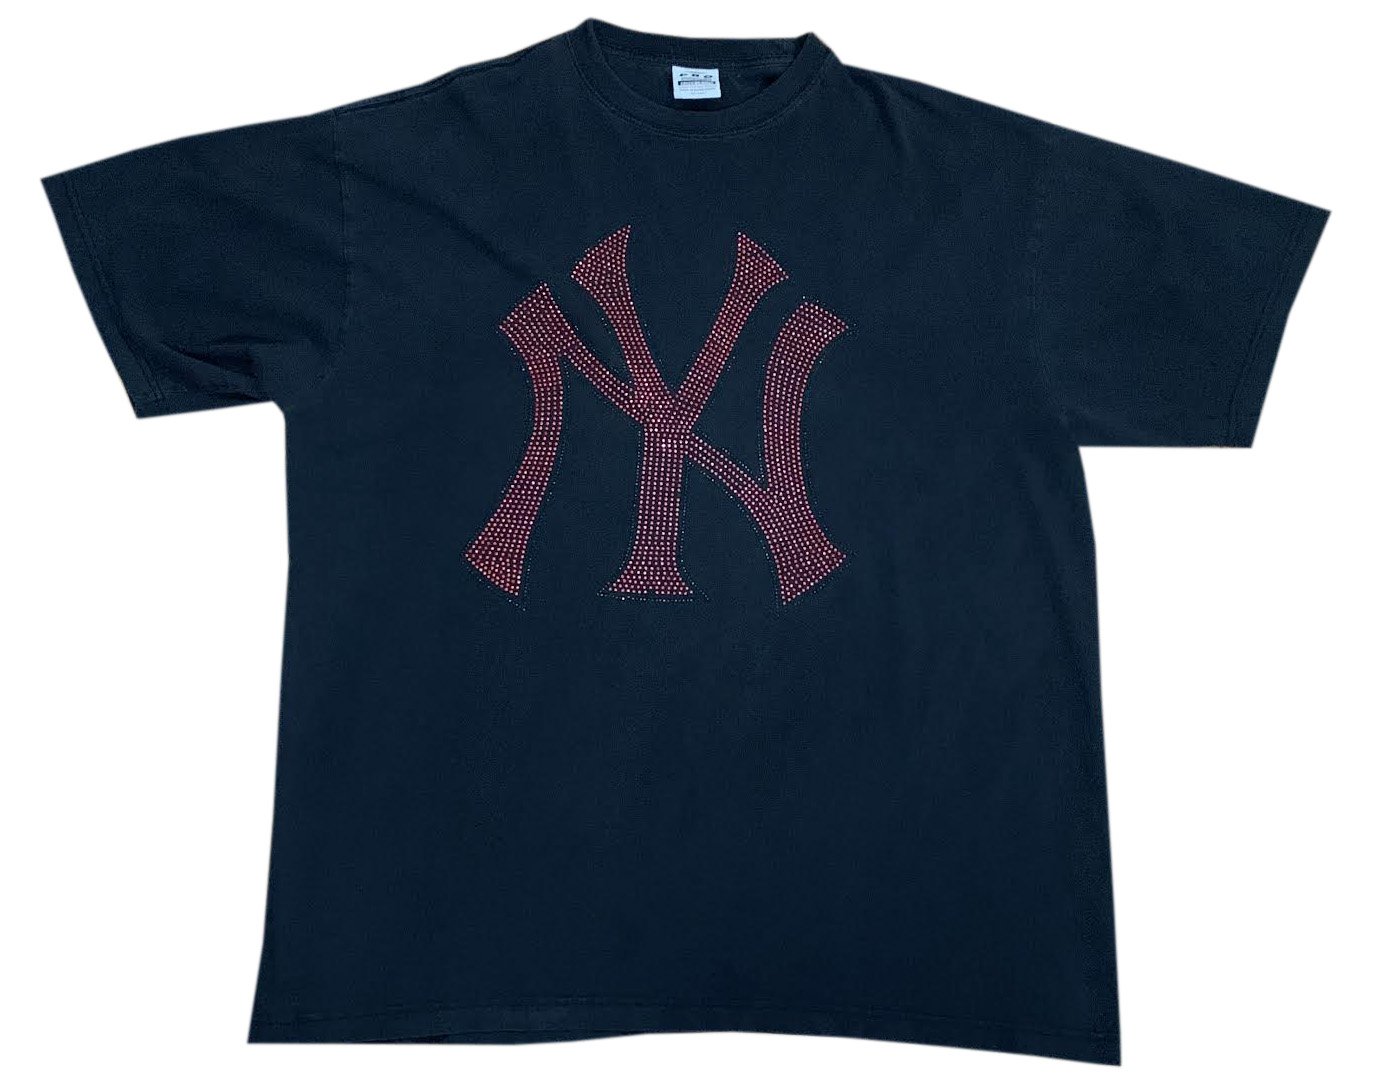 new york yankees black shirt